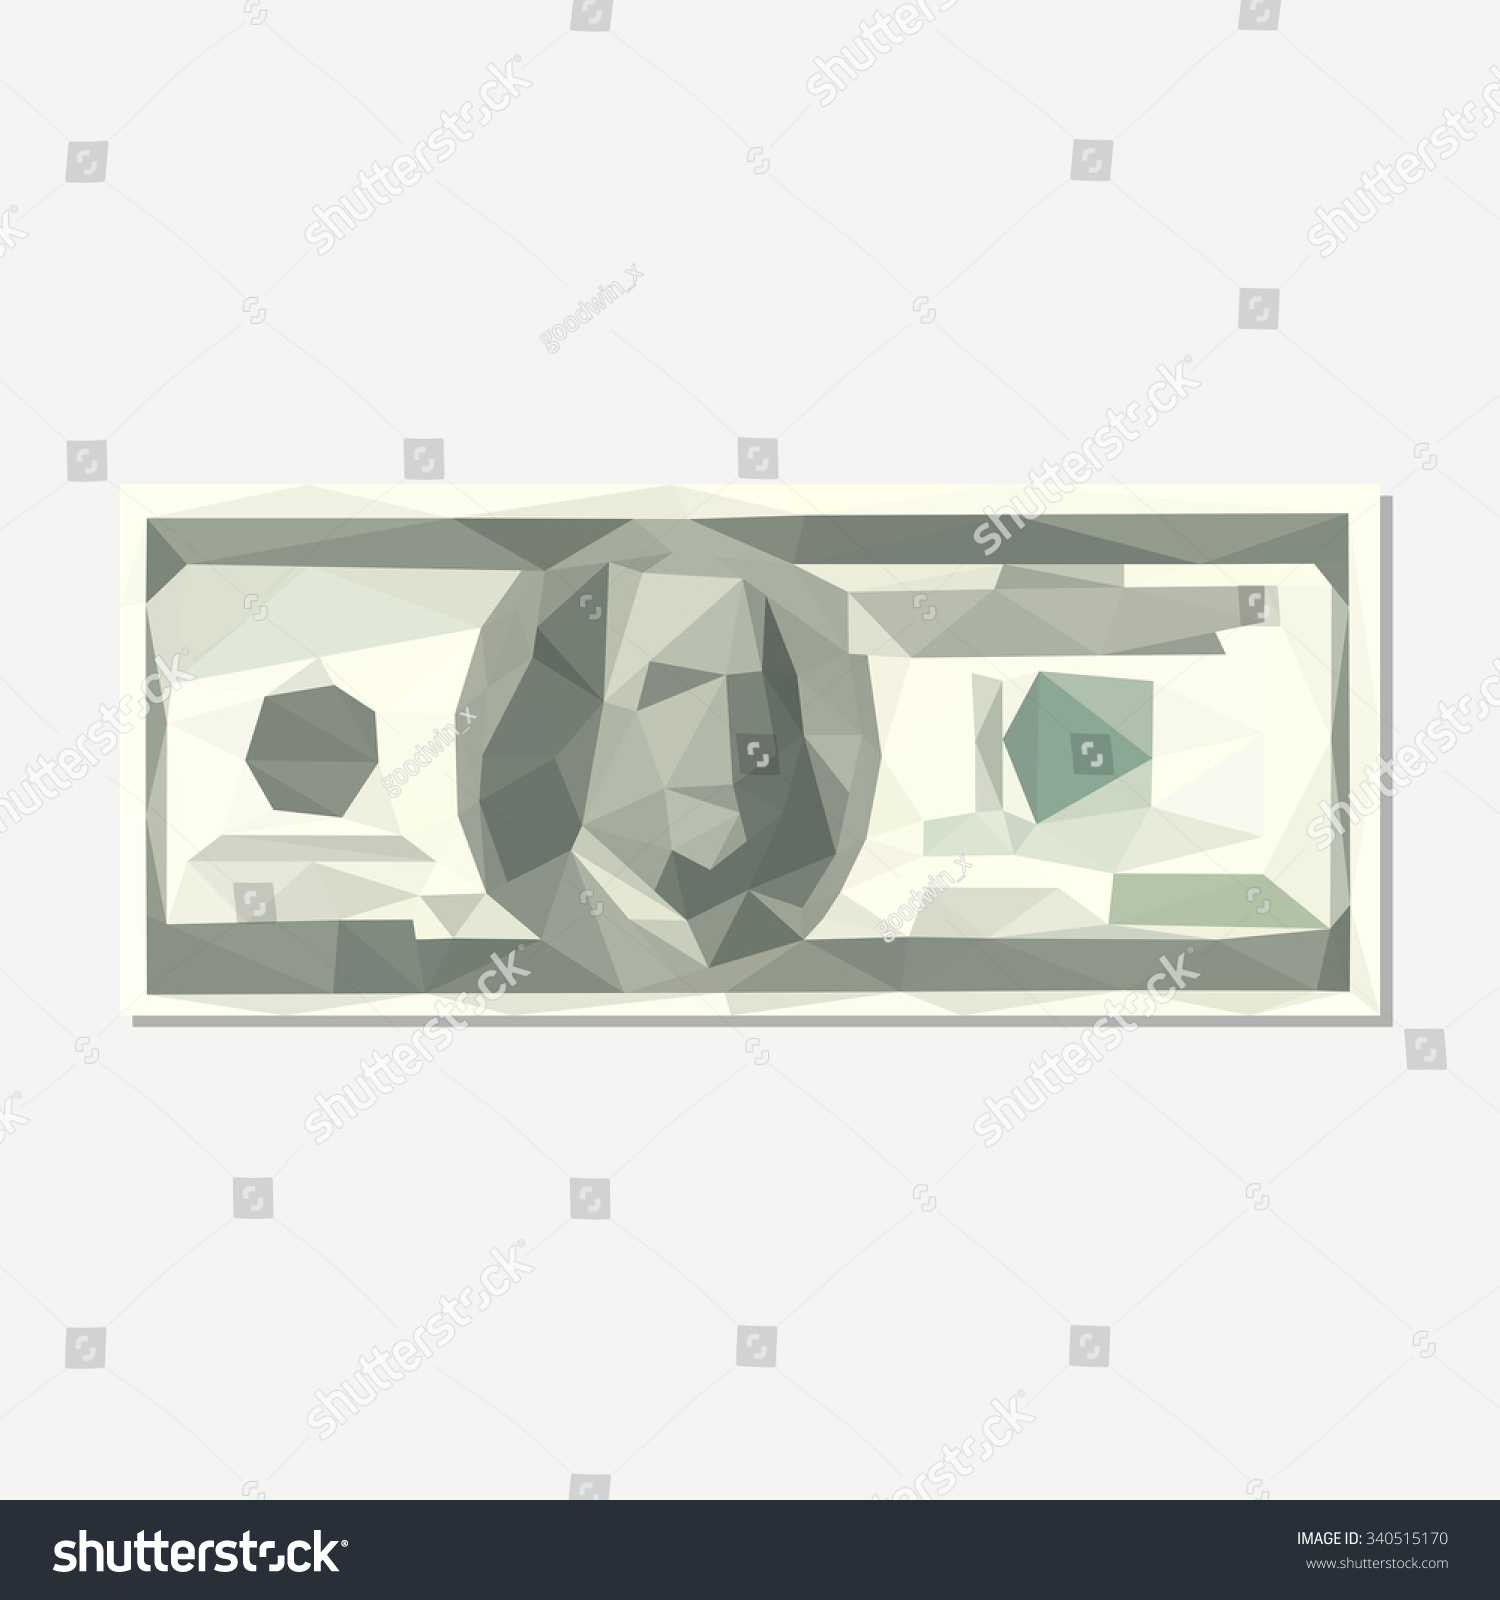 SVG of polygonal hundred-dollar bill accuracy svg